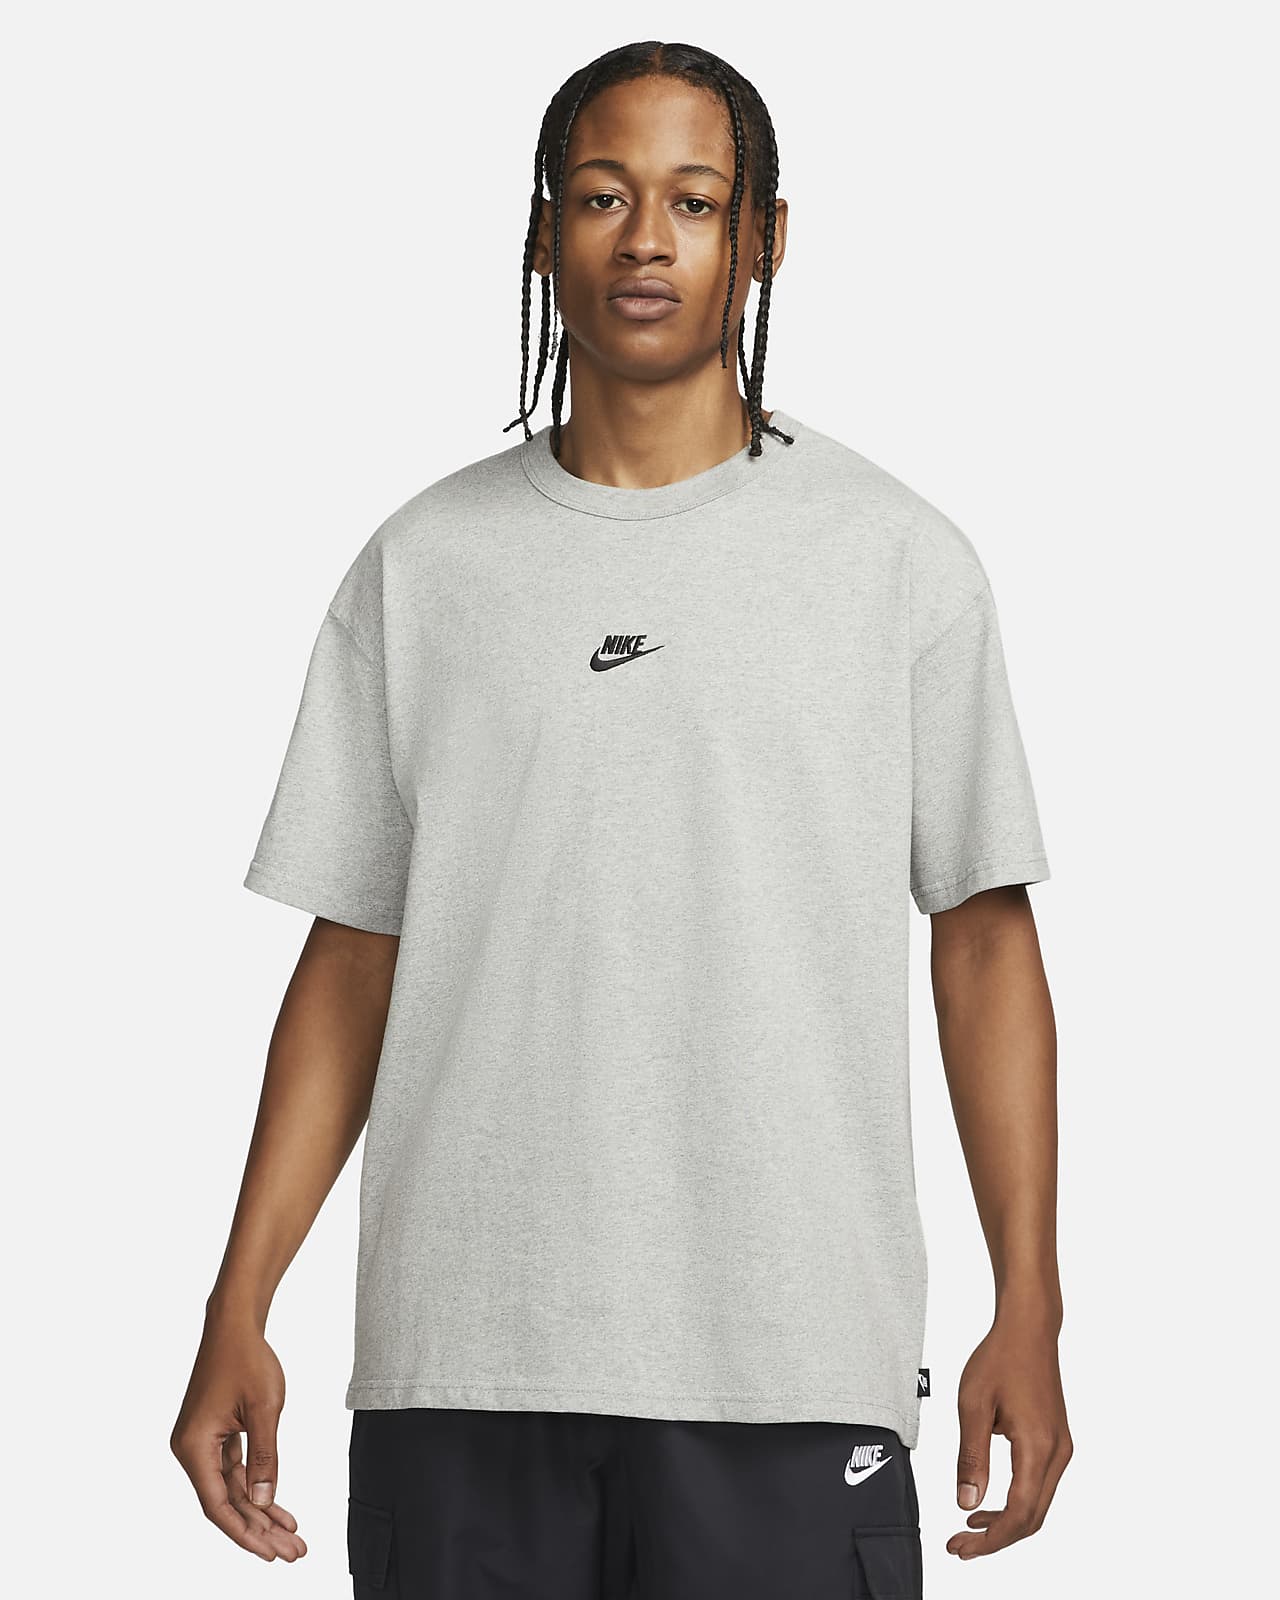 Nike Premium essentials logo t-shirt in grey with pocket